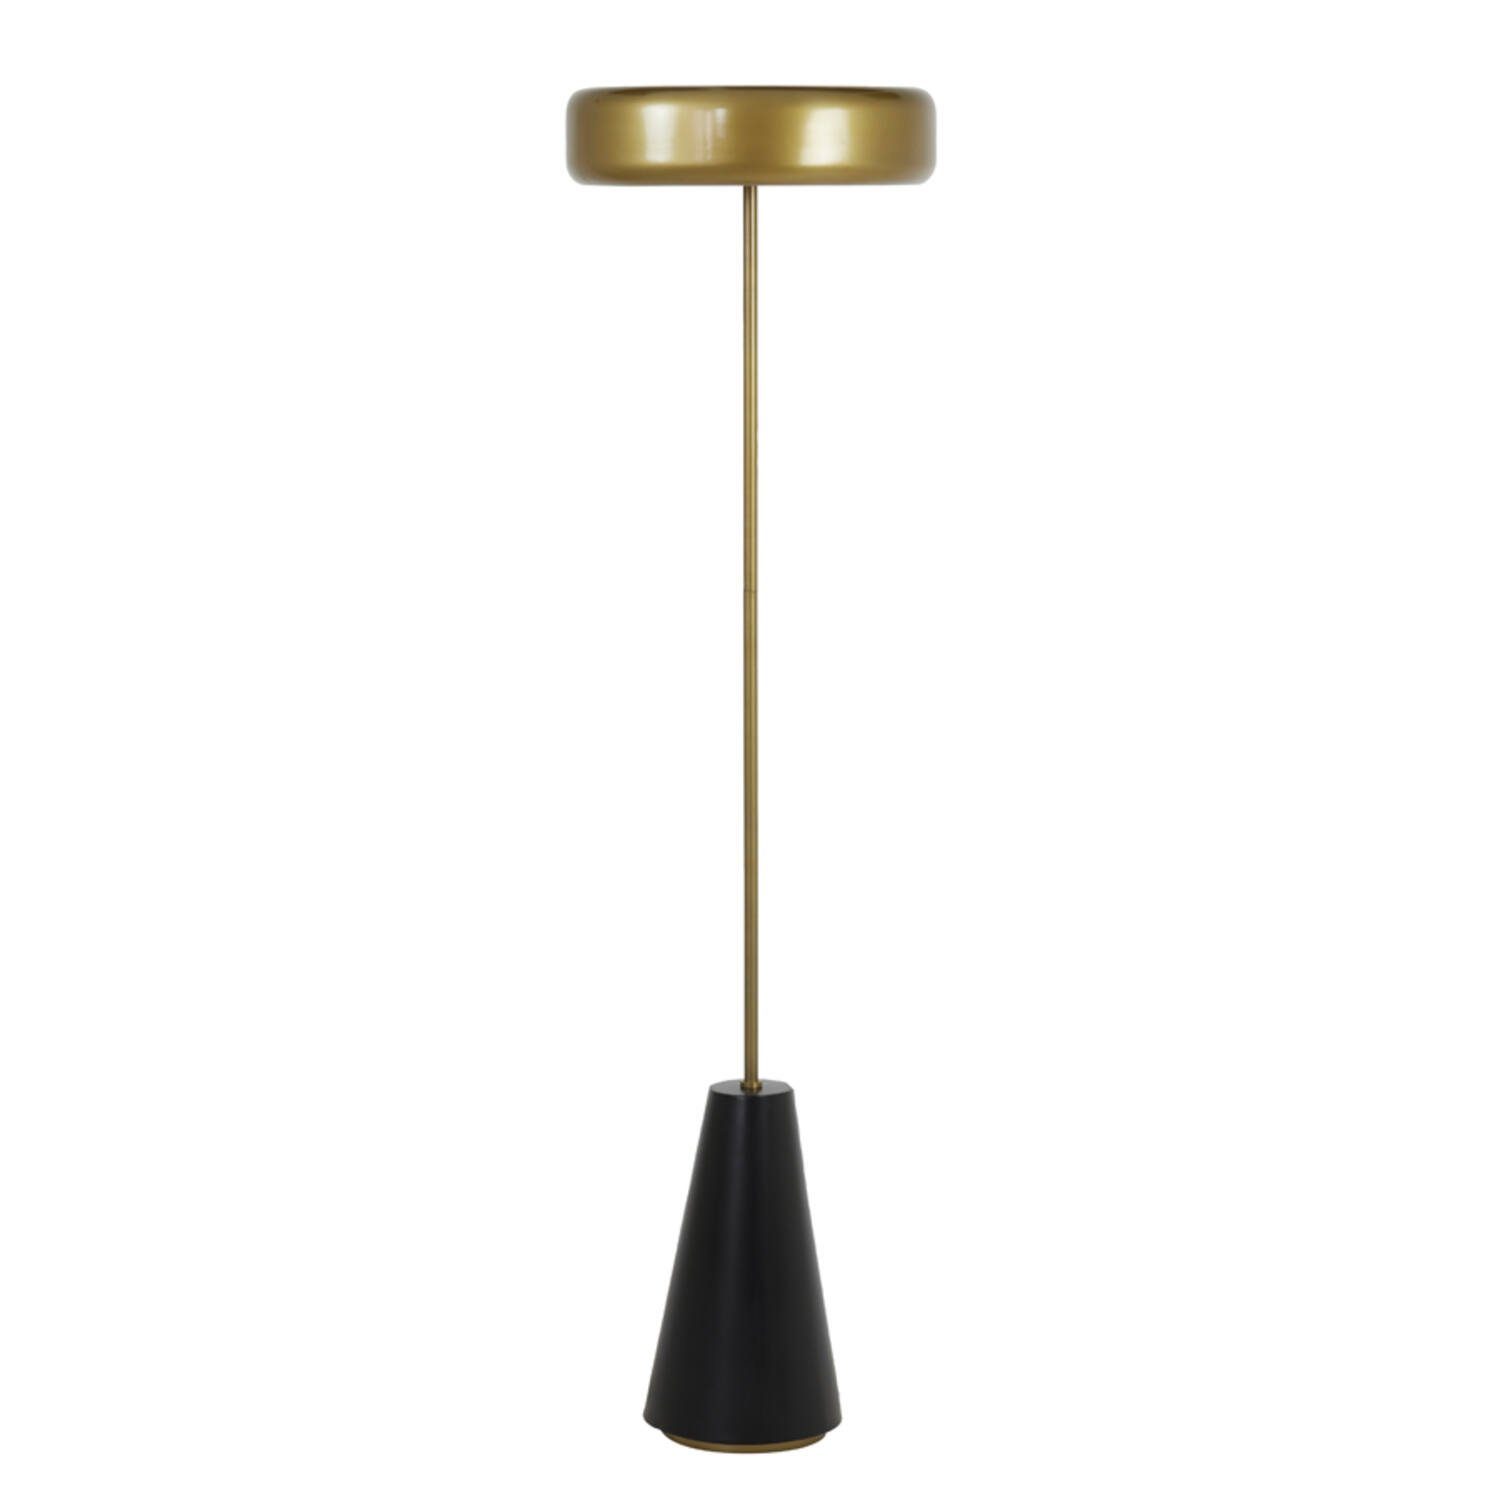 Light & Living Stehlampe Stehleuchte Lampe Light & Living NAGAI matt schwarz-antik bronze